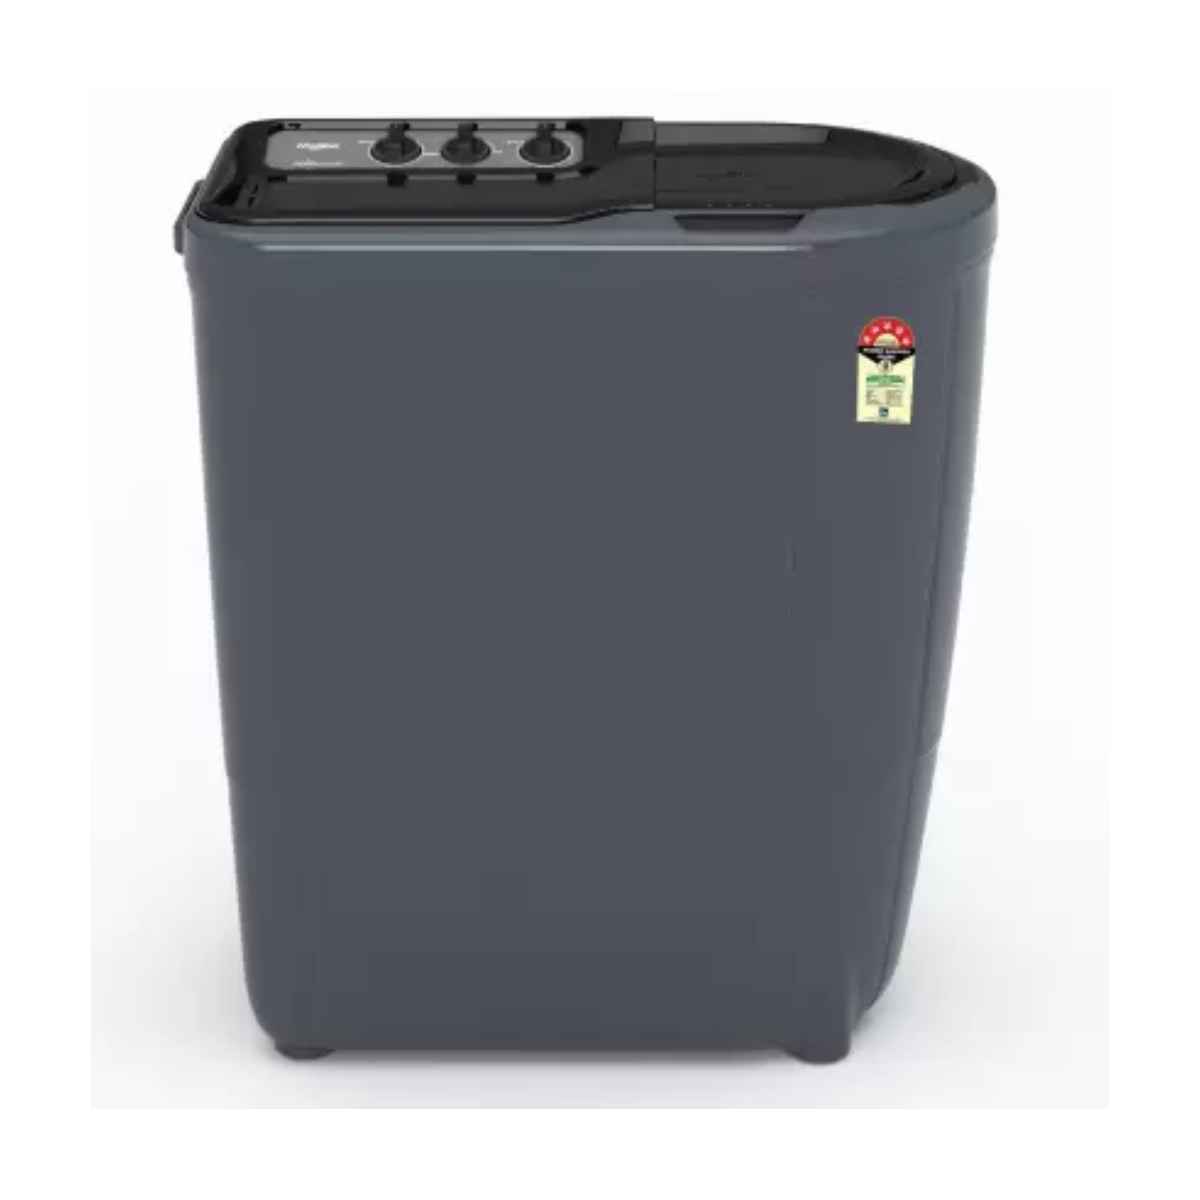 व्हर्लपूल 6 kg Semi Automatic टॉप Load washing machine (Superb Atom 60i) 